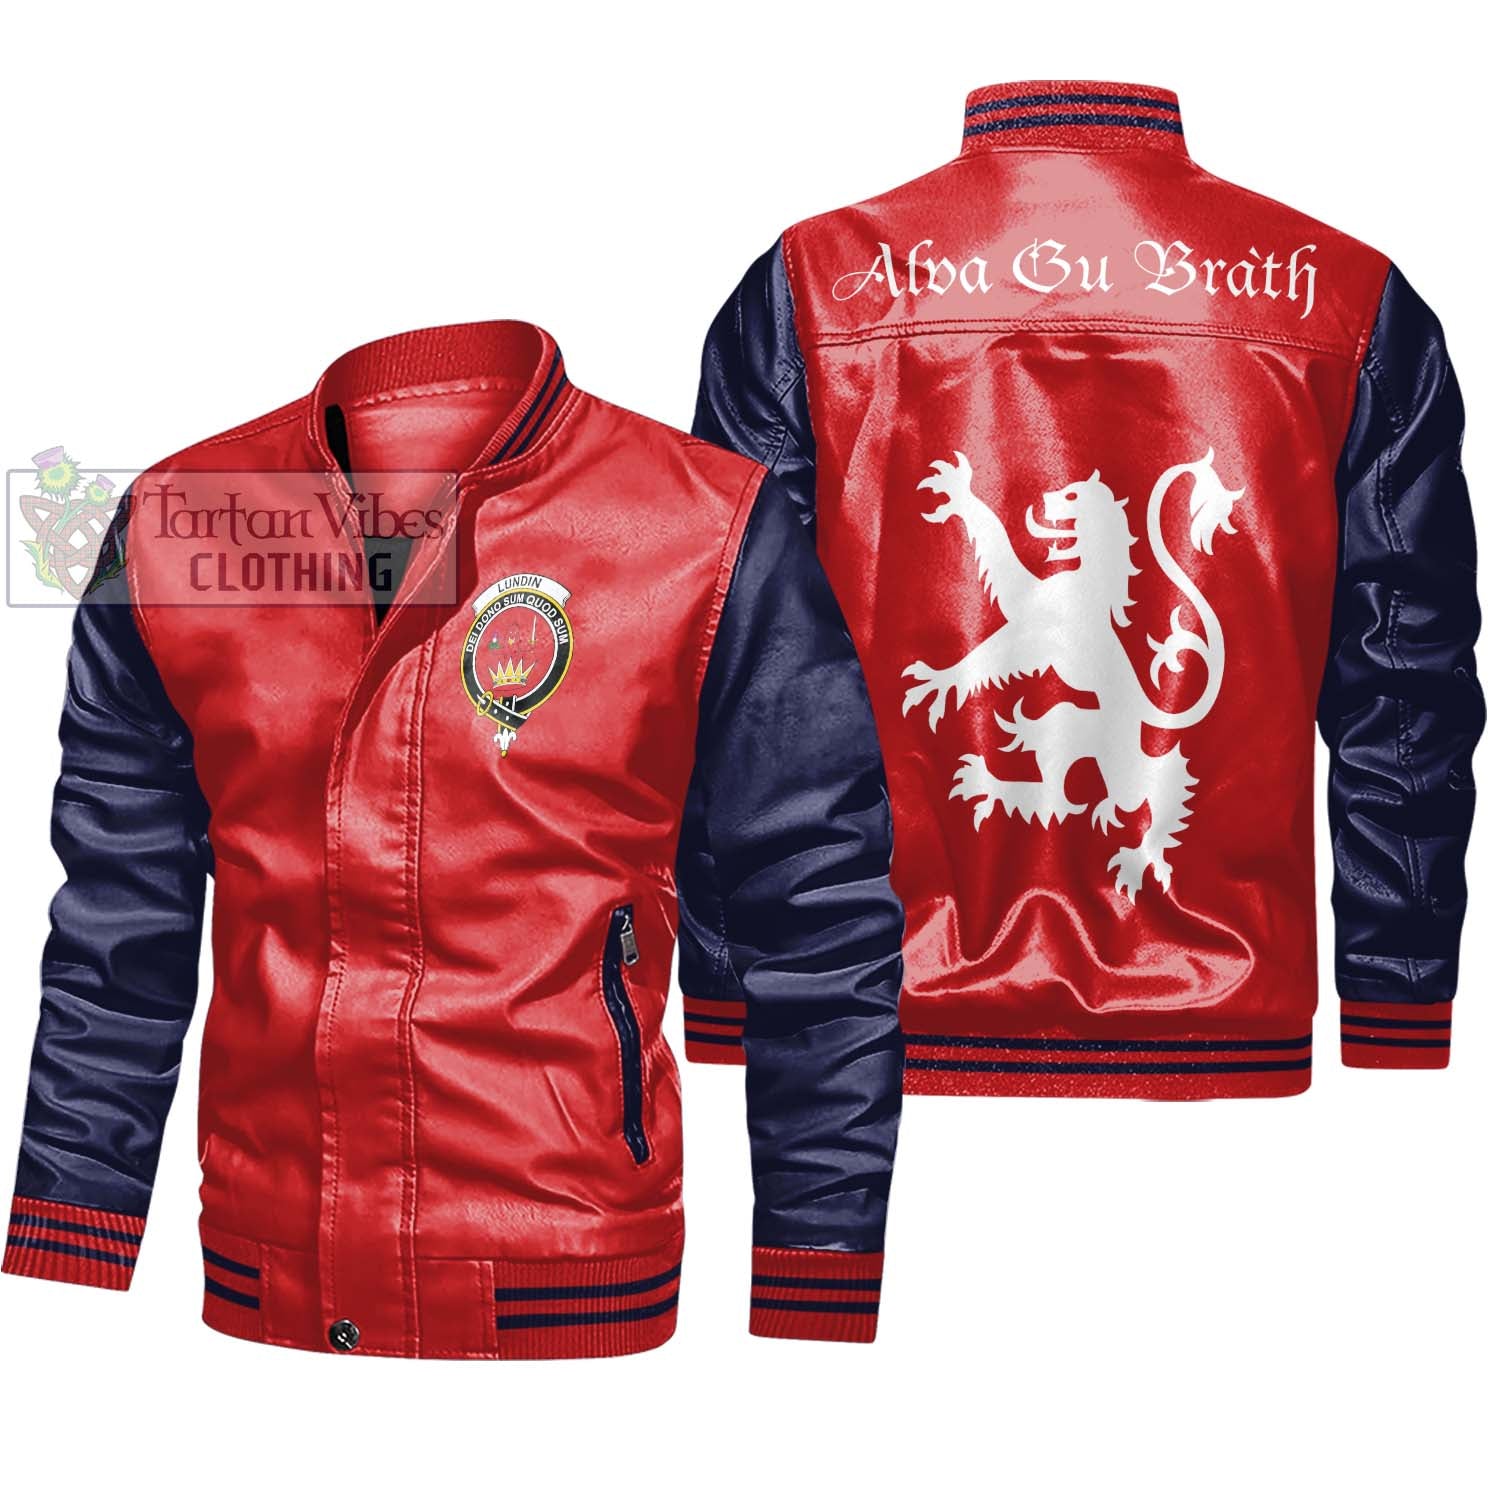 Tartan Vibes Clothing Lundin Family Crest Leather Bomber Jacket Lion Rampant Alba Gu Brath Style